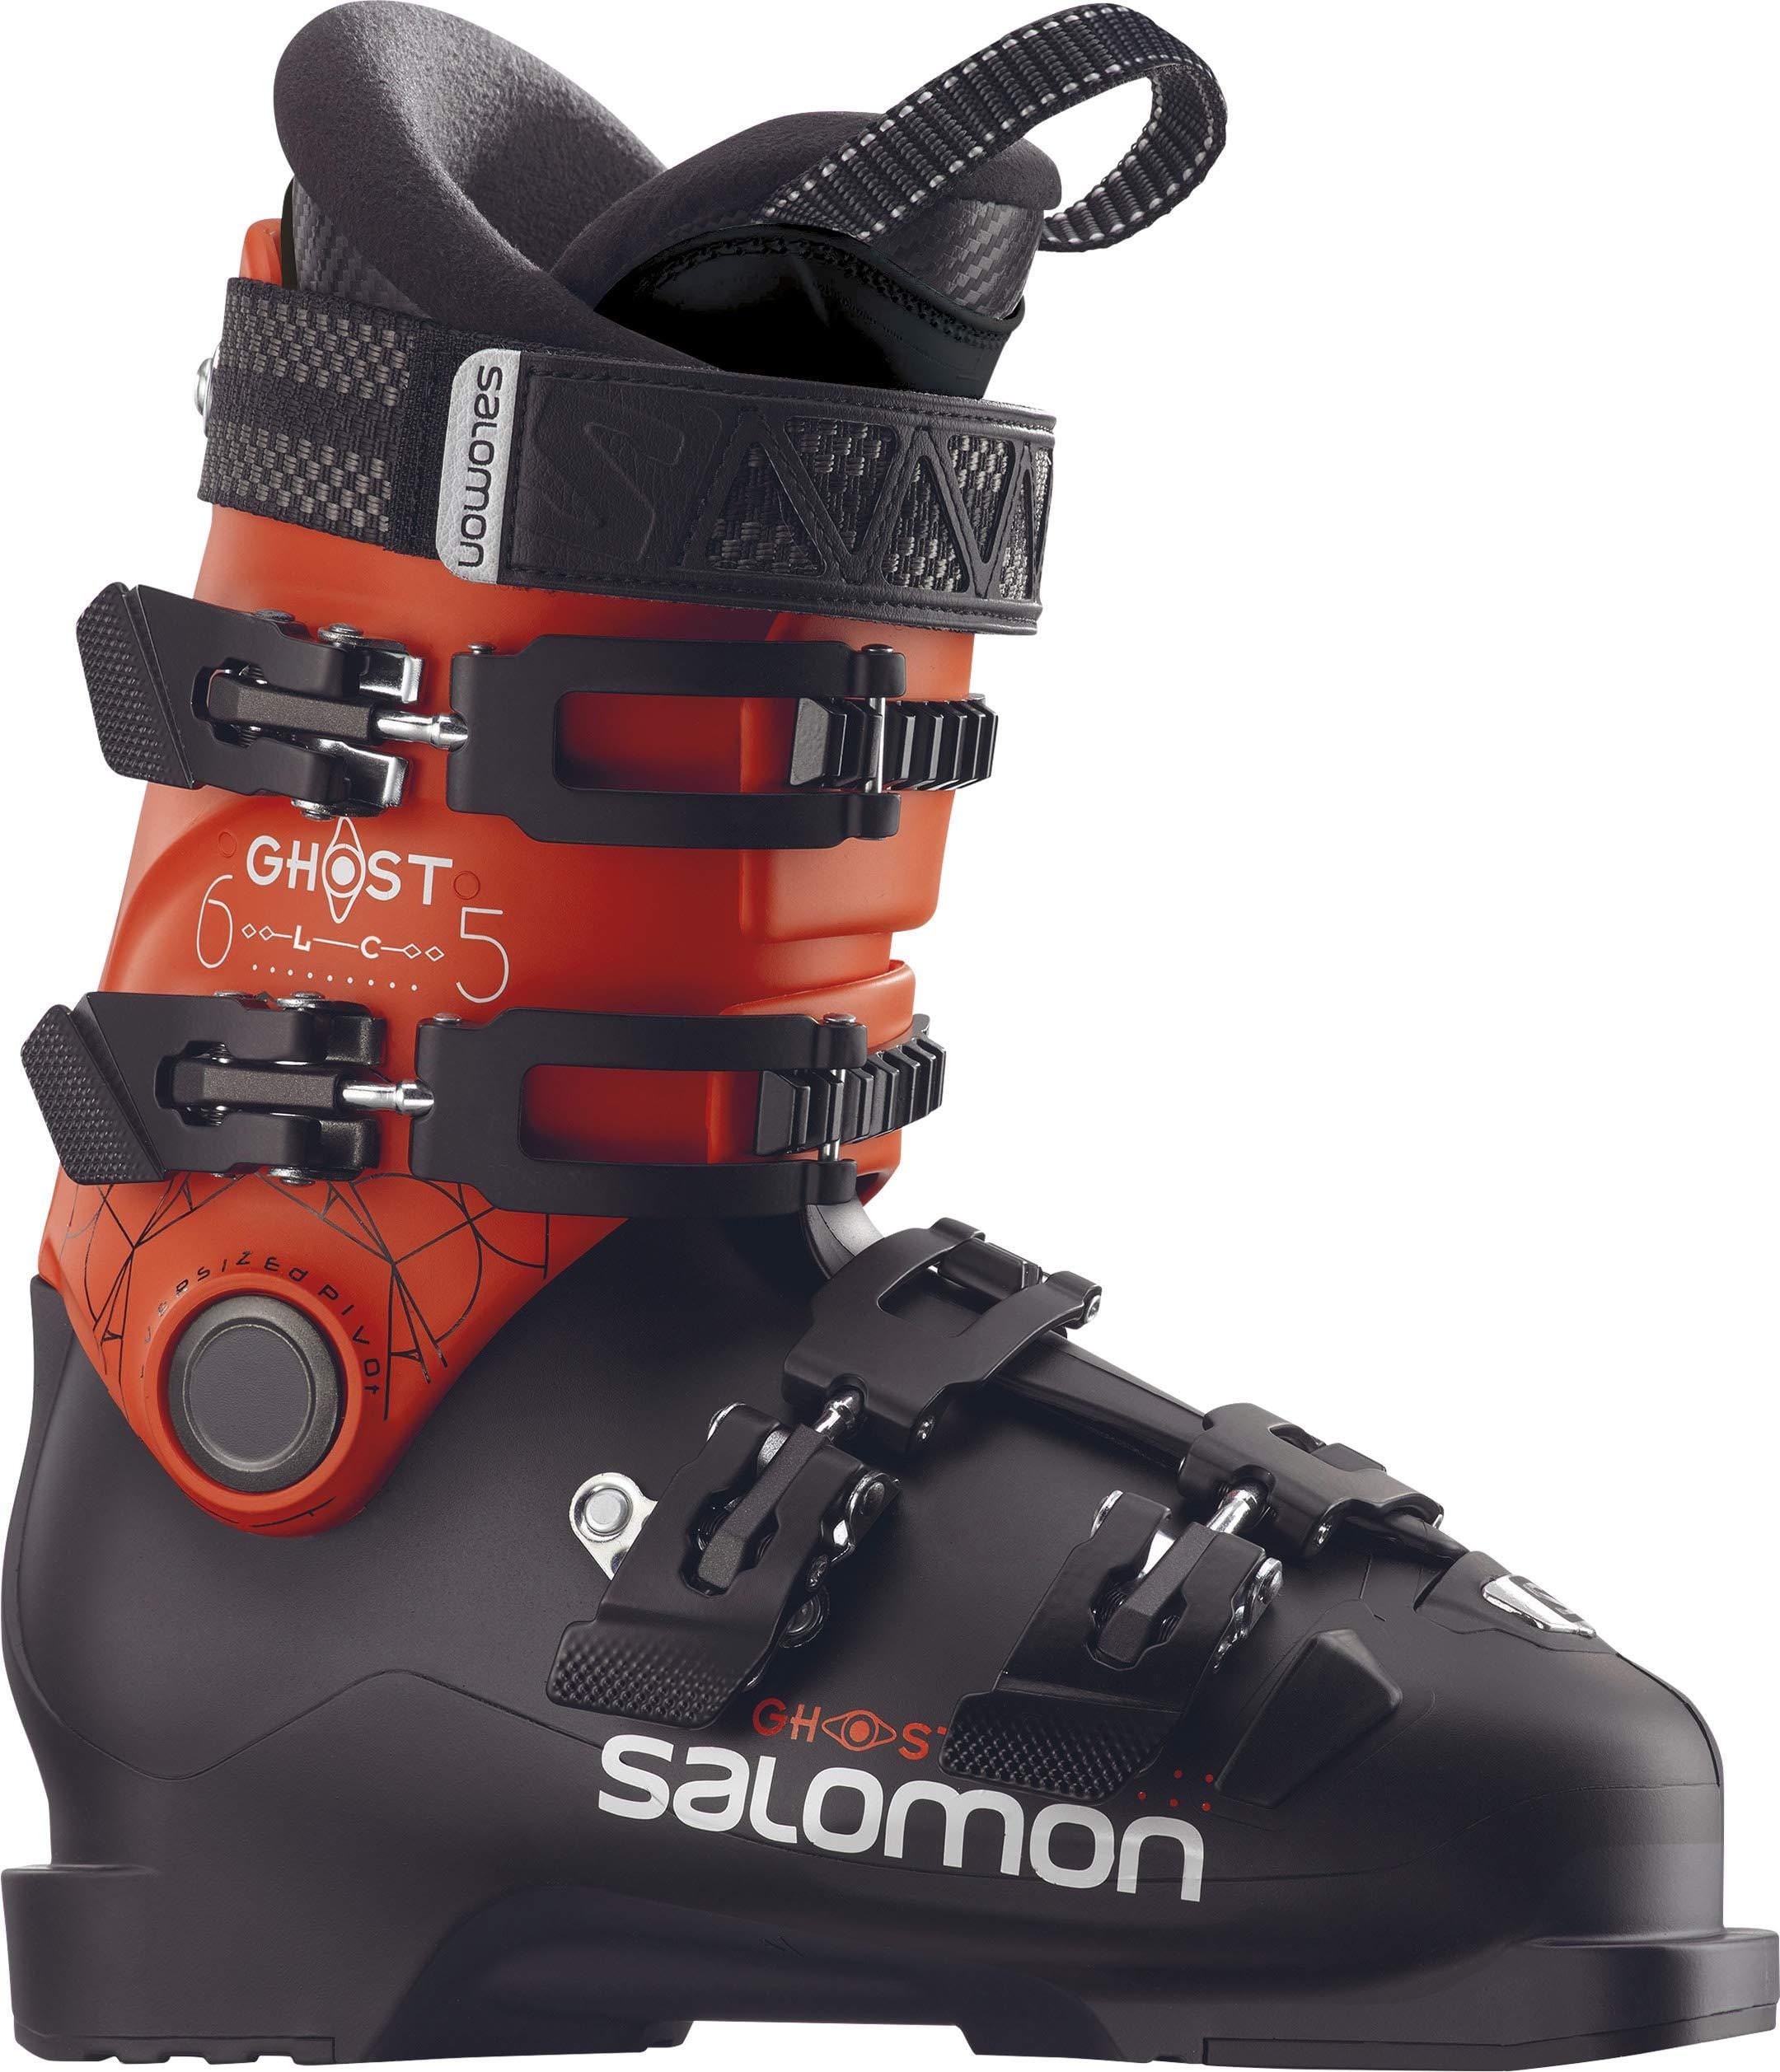 SALOMON Ghost LC 65 Ski Boots Kid's Black/Orange Sz 6.5 (24.5)